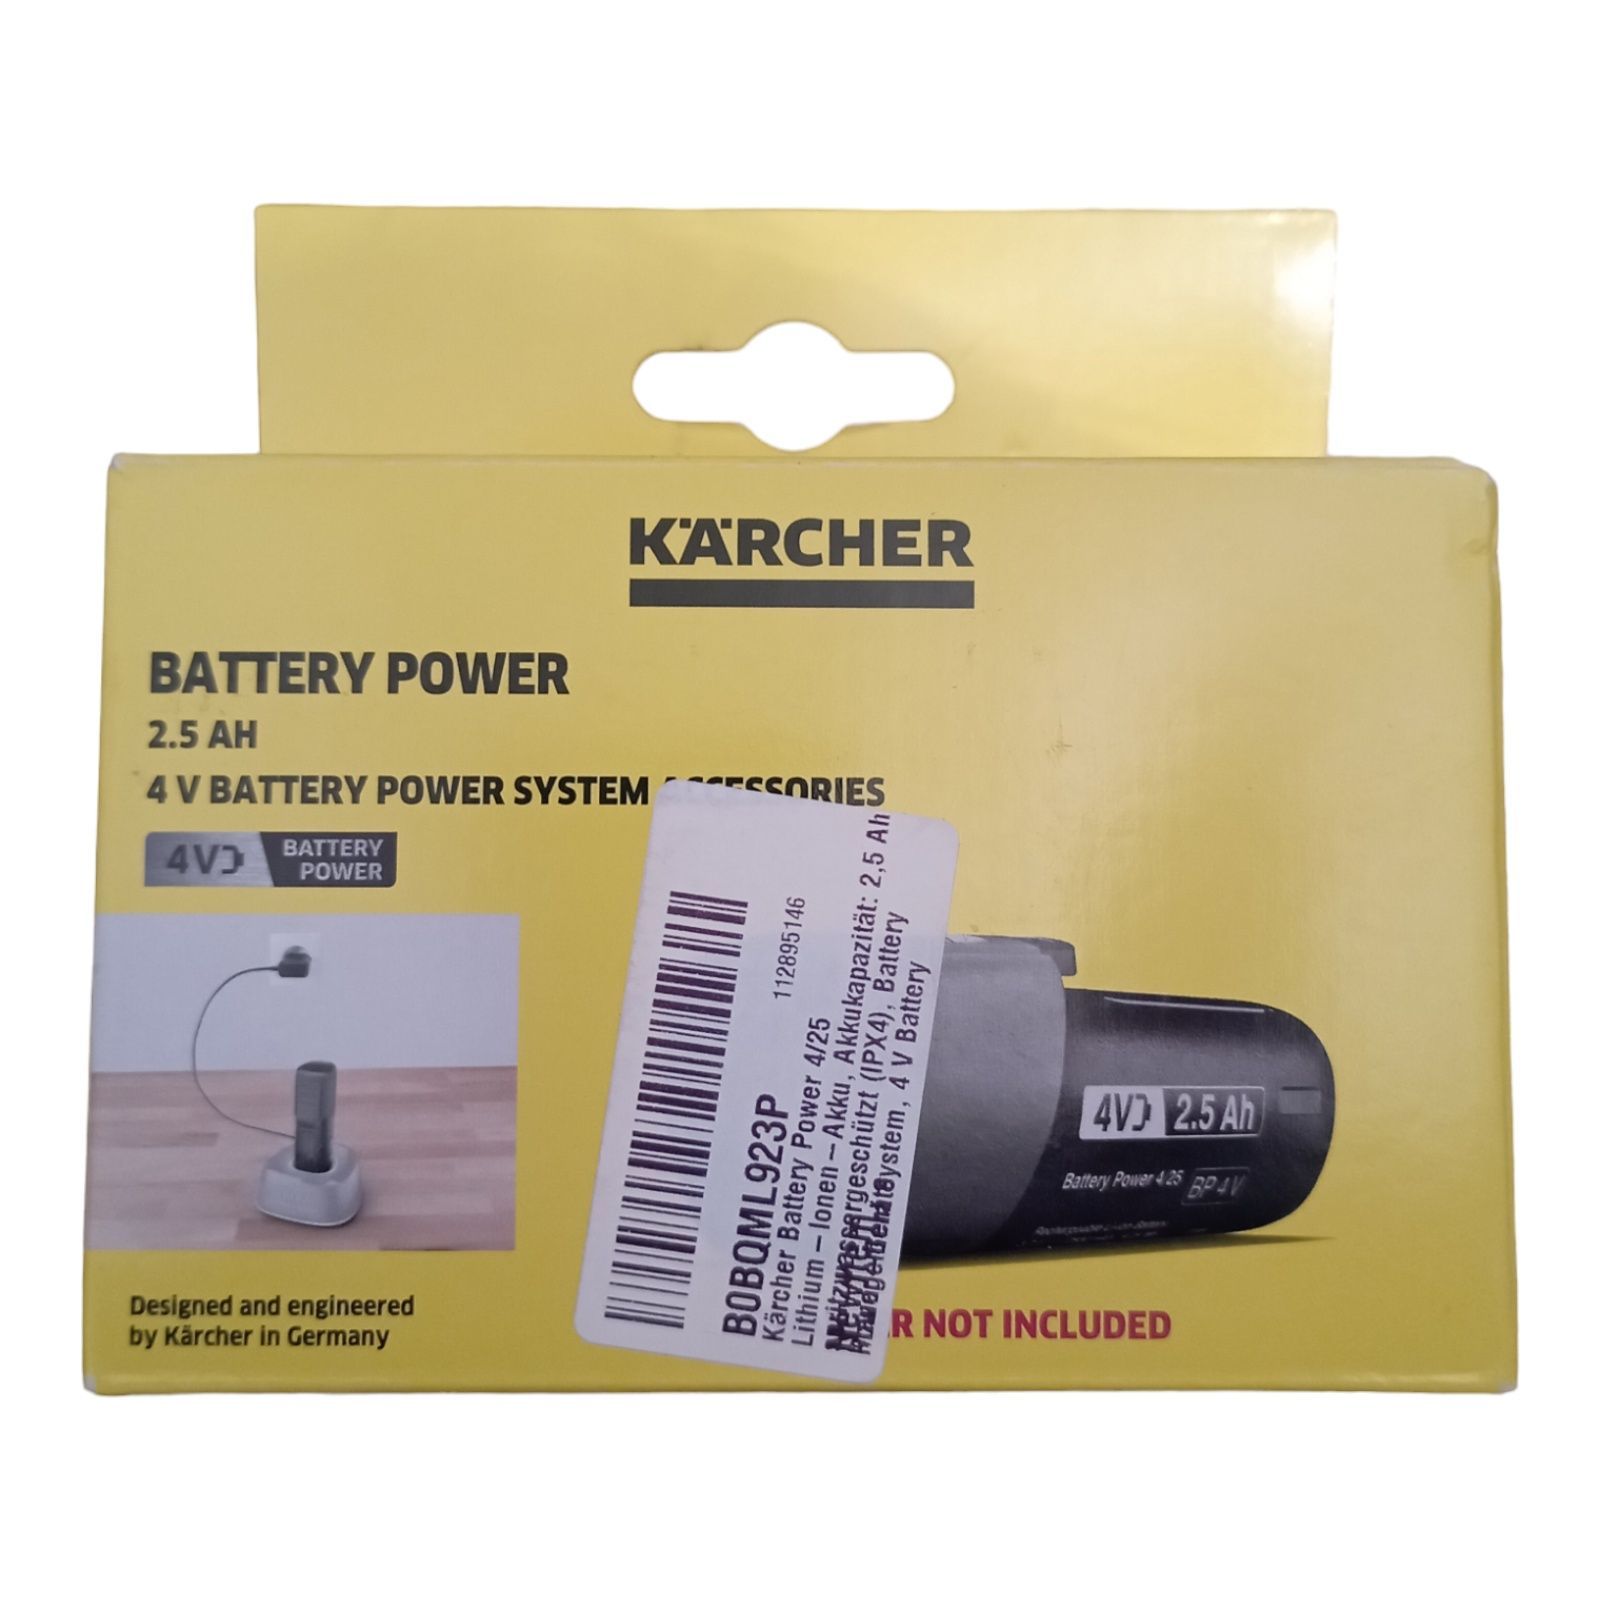 Karcher Akumulator Battery Power 4V 2.5 AH